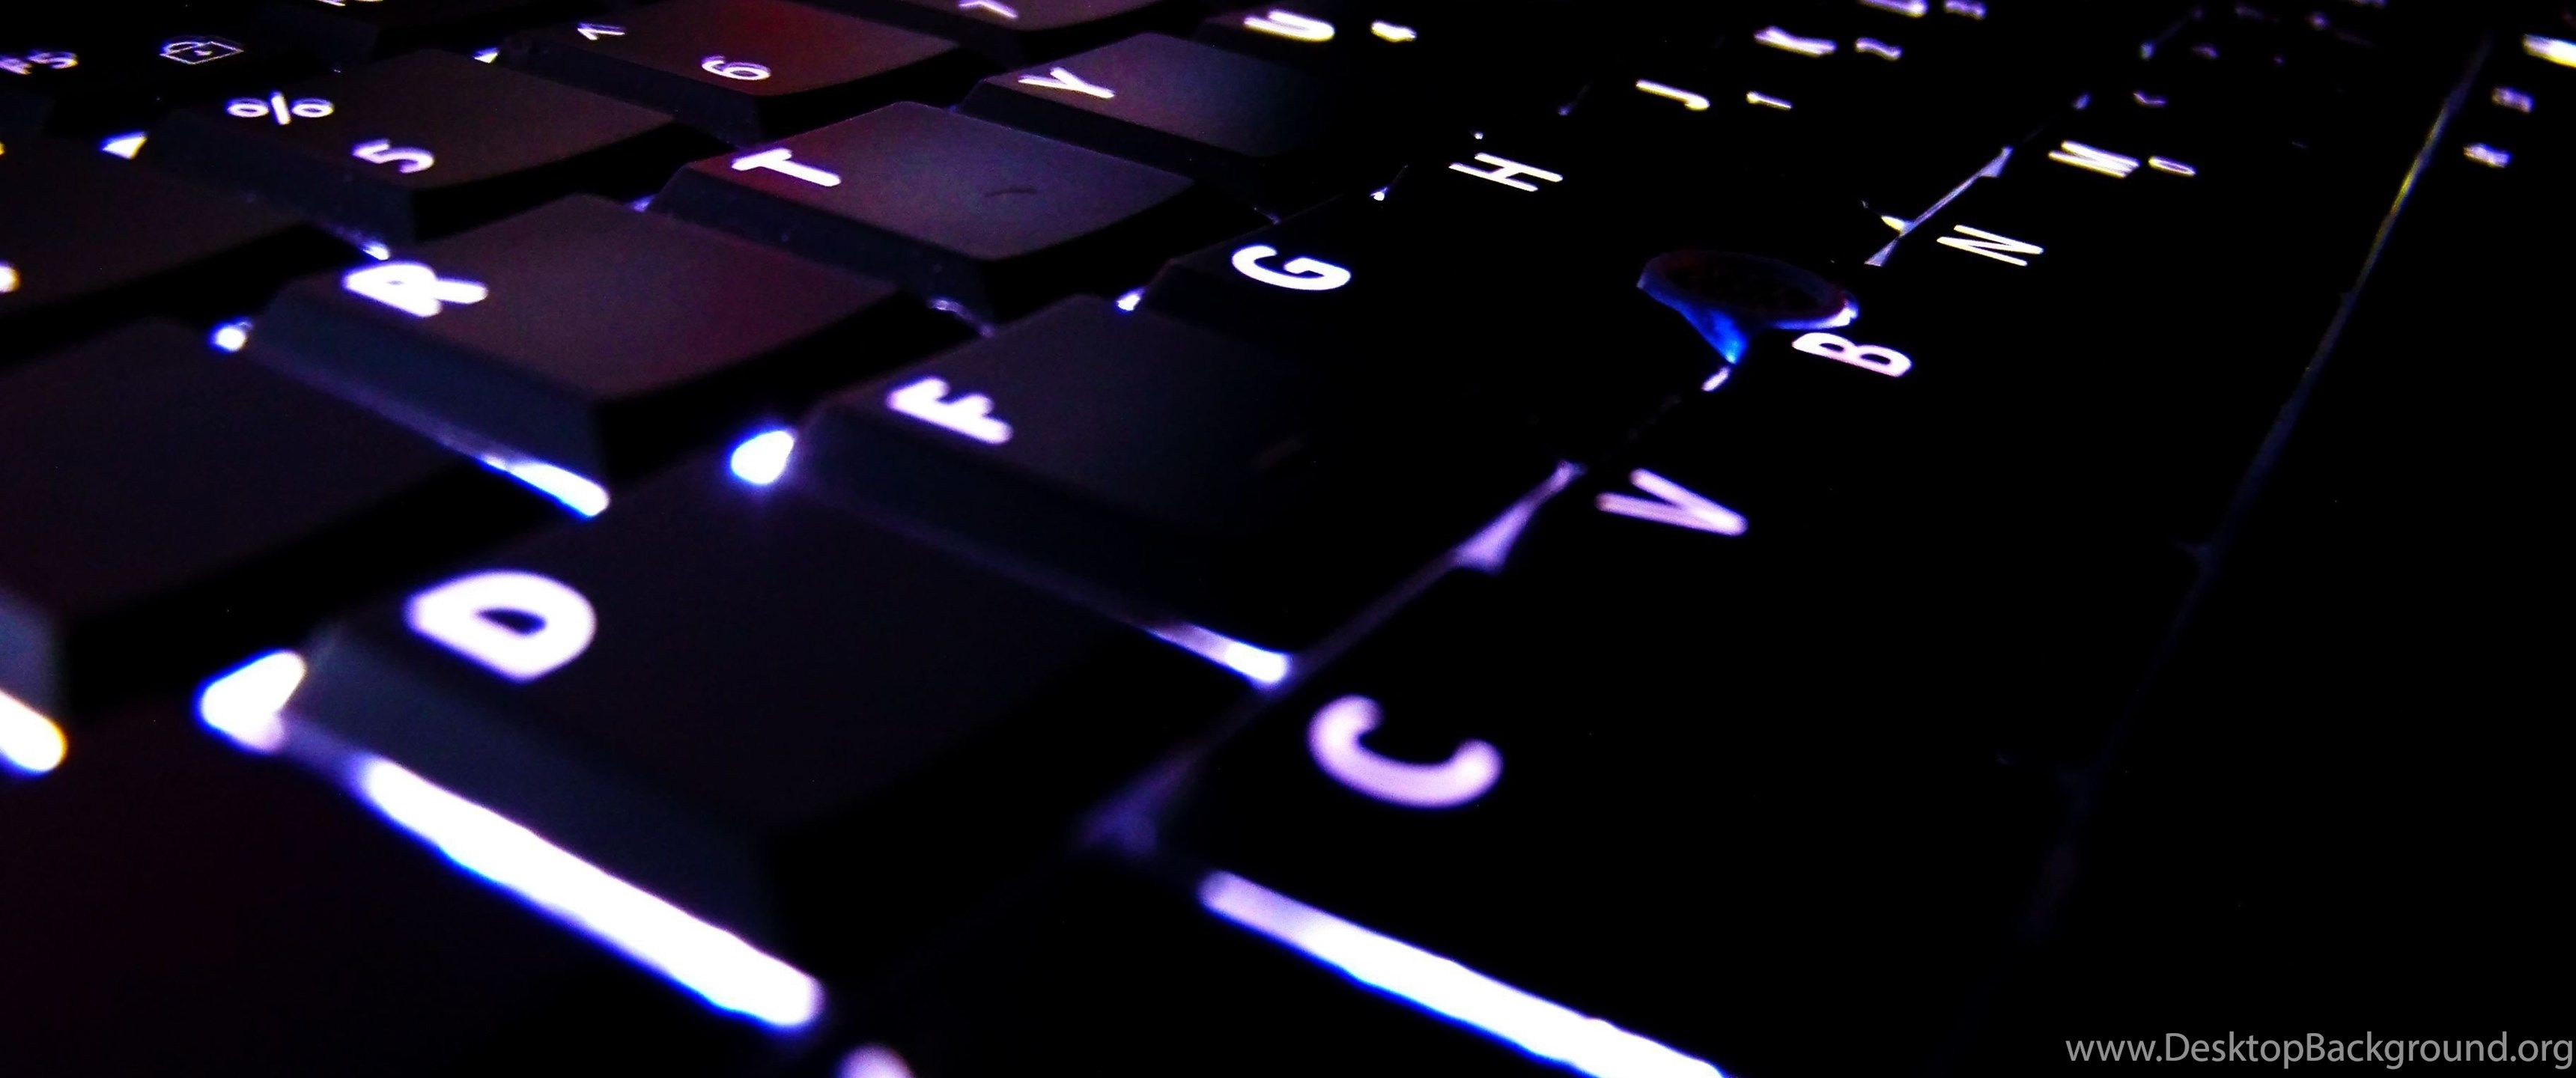 Dell Latitude Keyboard Computer Wallpaper, Desktop Background. Desktop Background